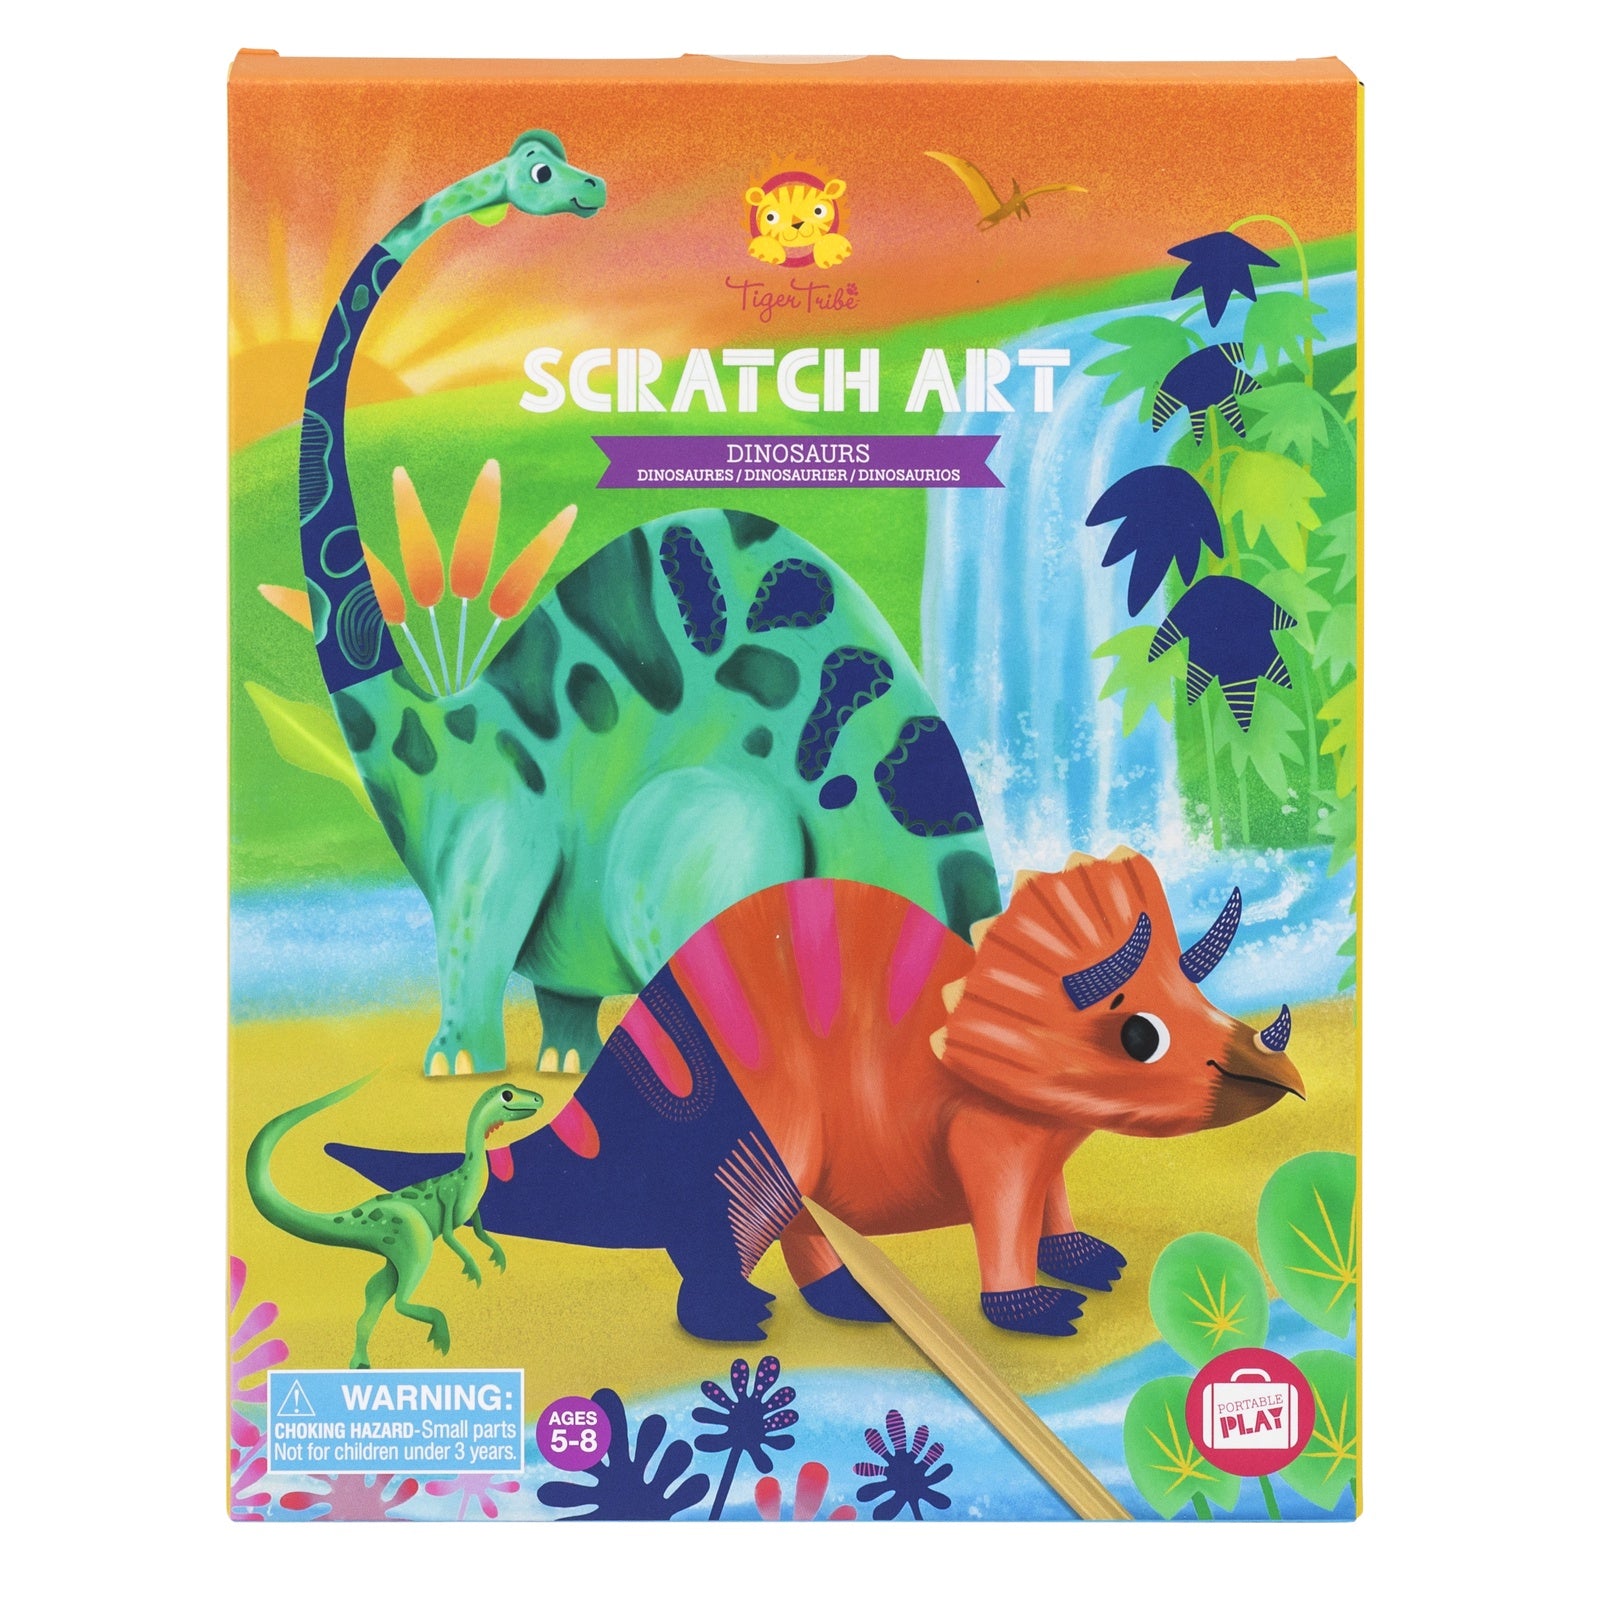 Tiger Tribe Scratch Art - Dinosaurs